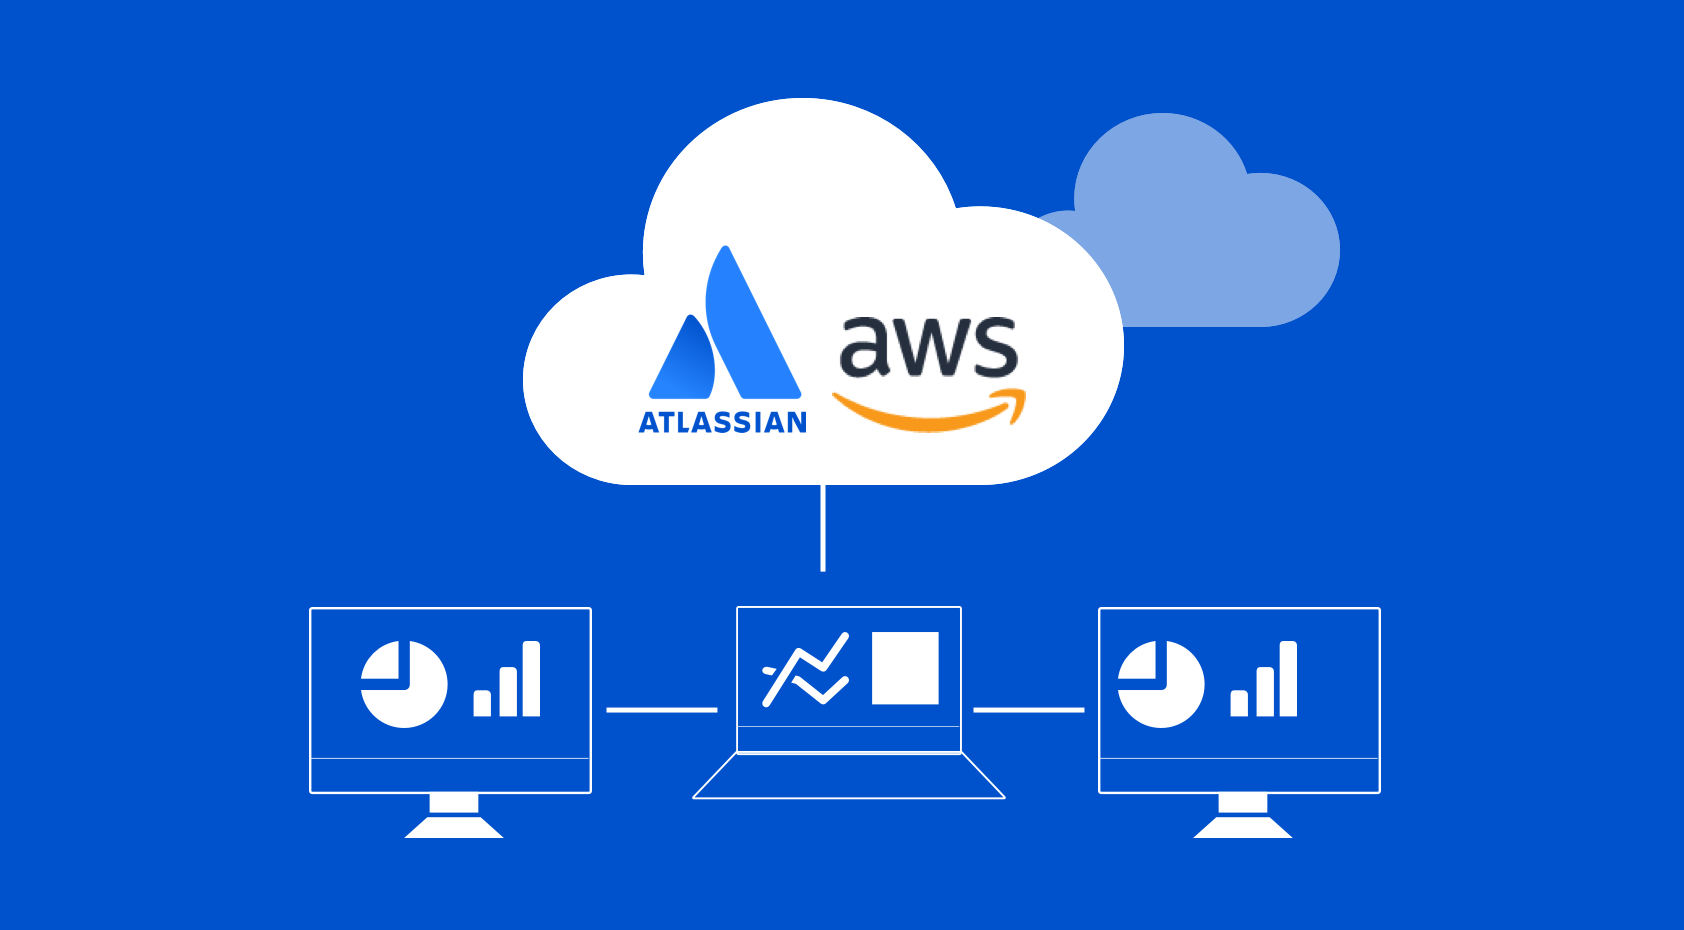 Atlassian workload migrations onto AWS